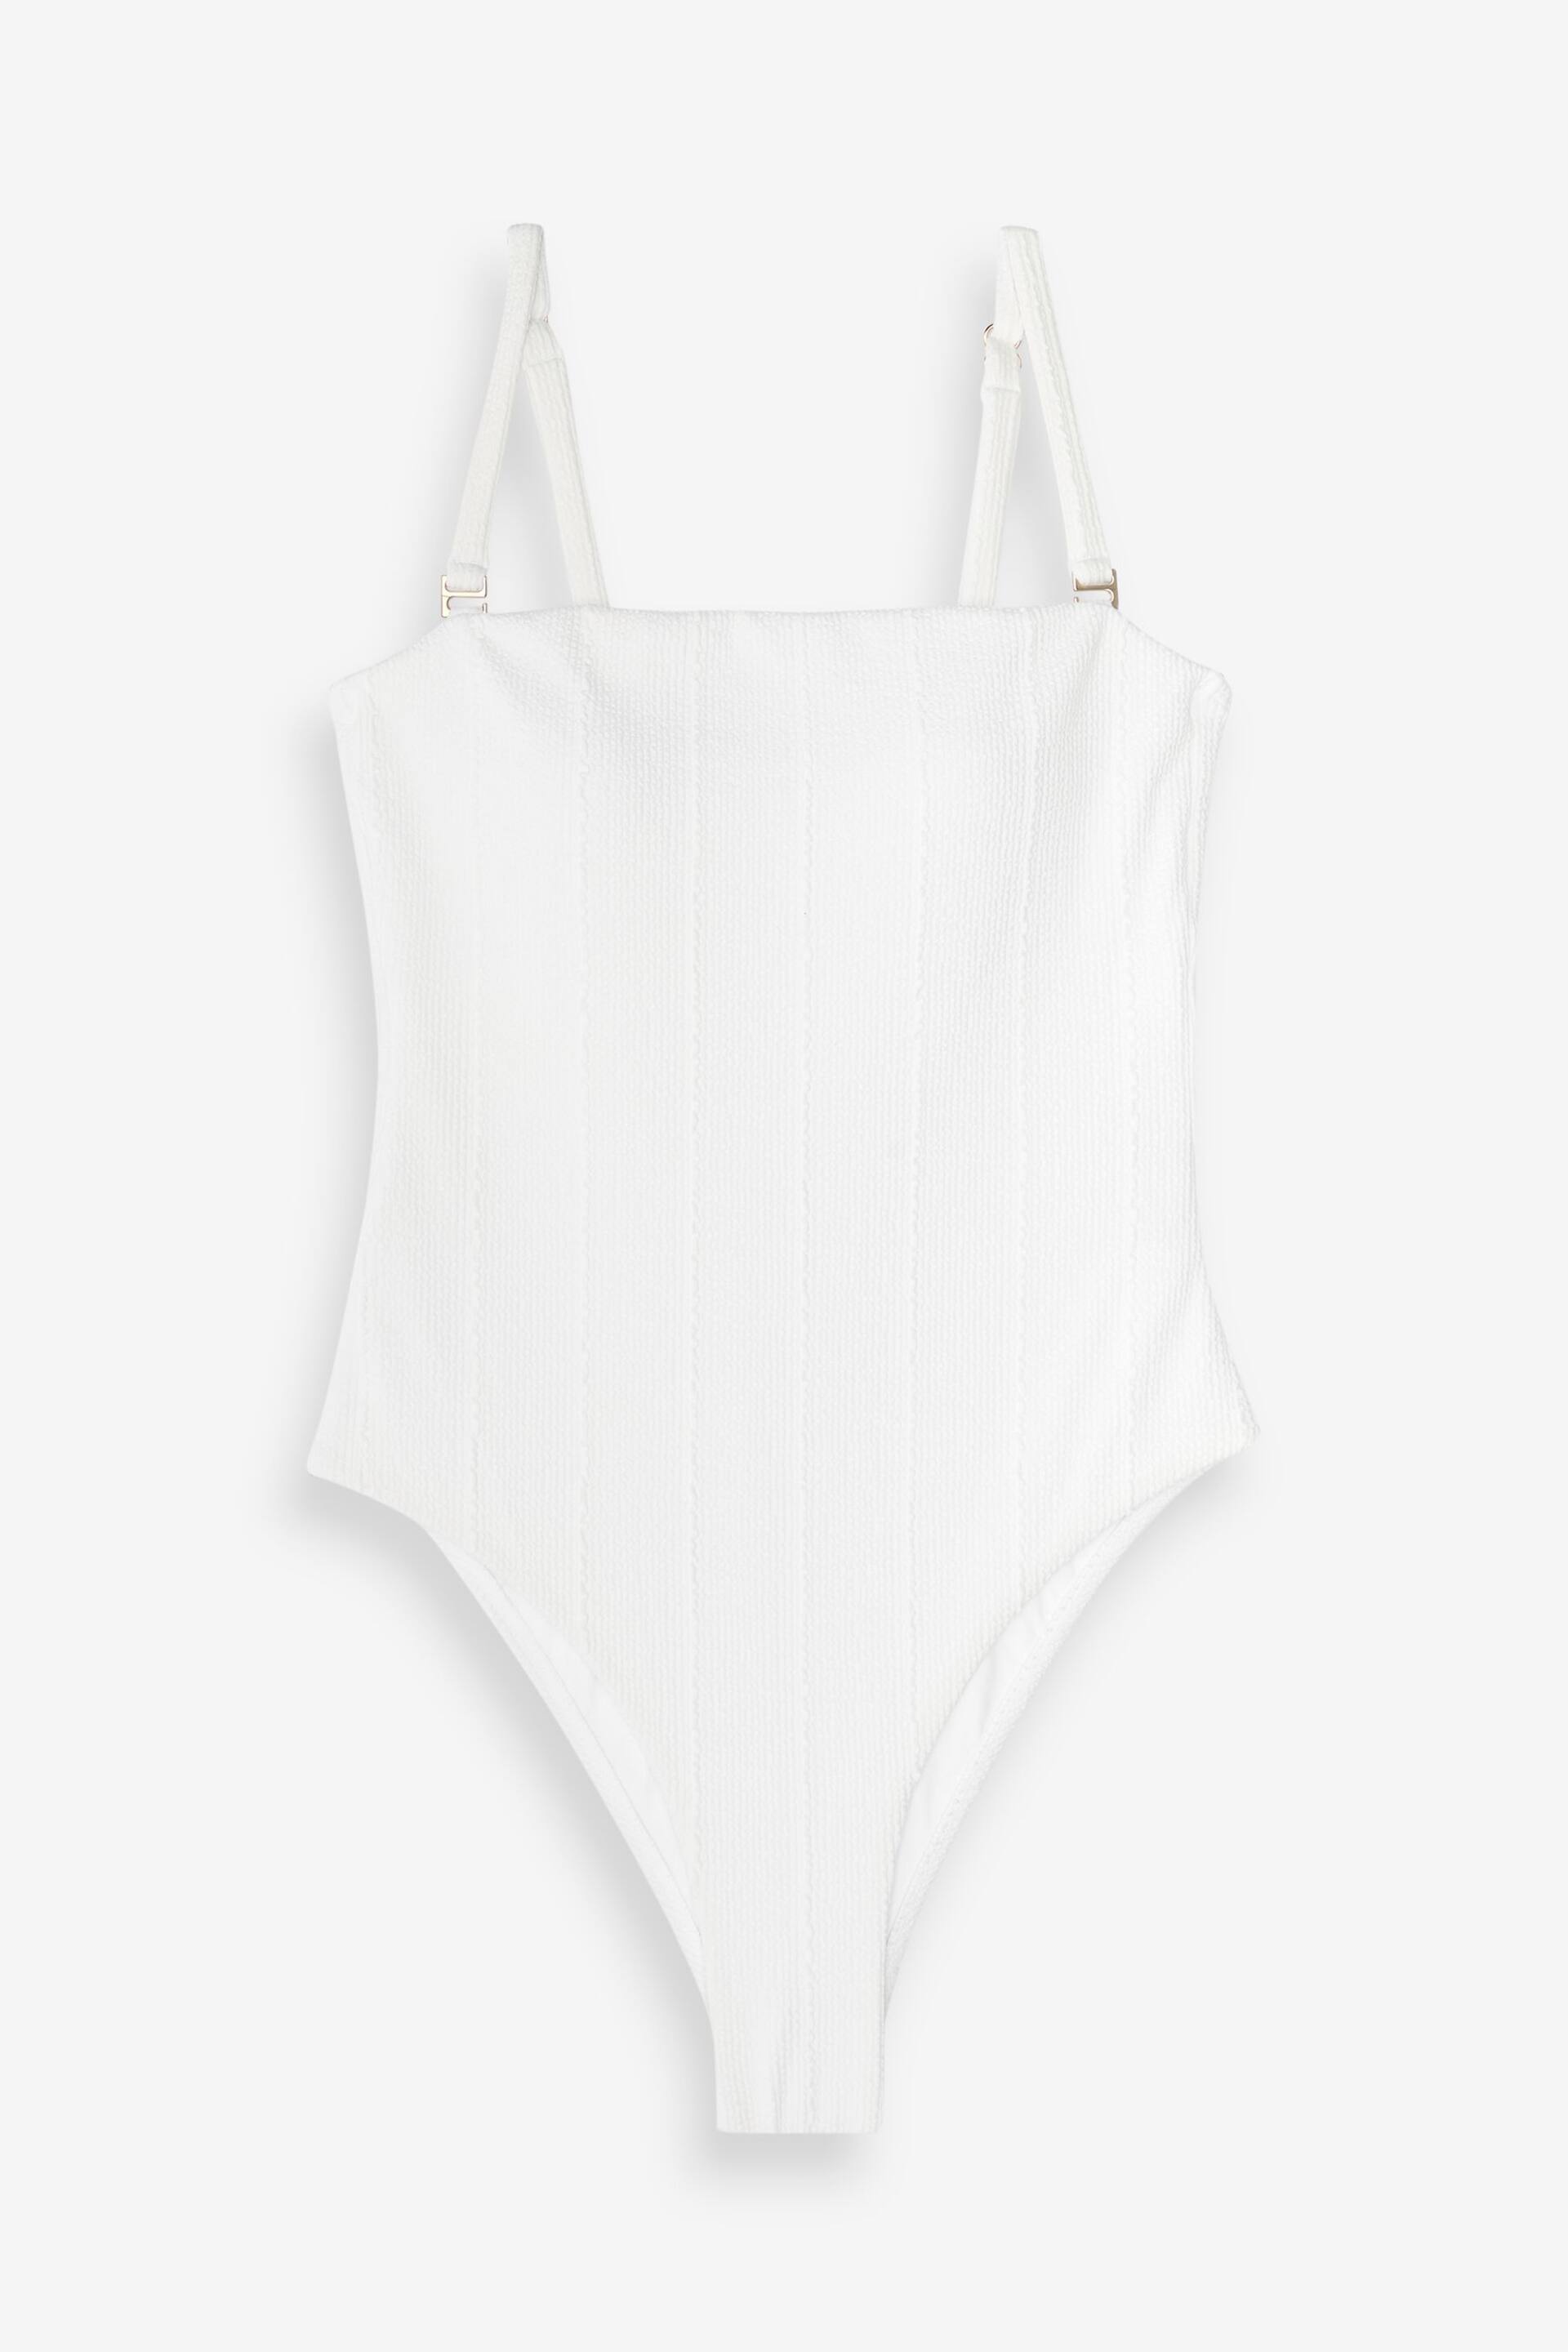 Mint Velvet White Ripple Bandeau Tummy Control Swimsuit - Image 3 of 5